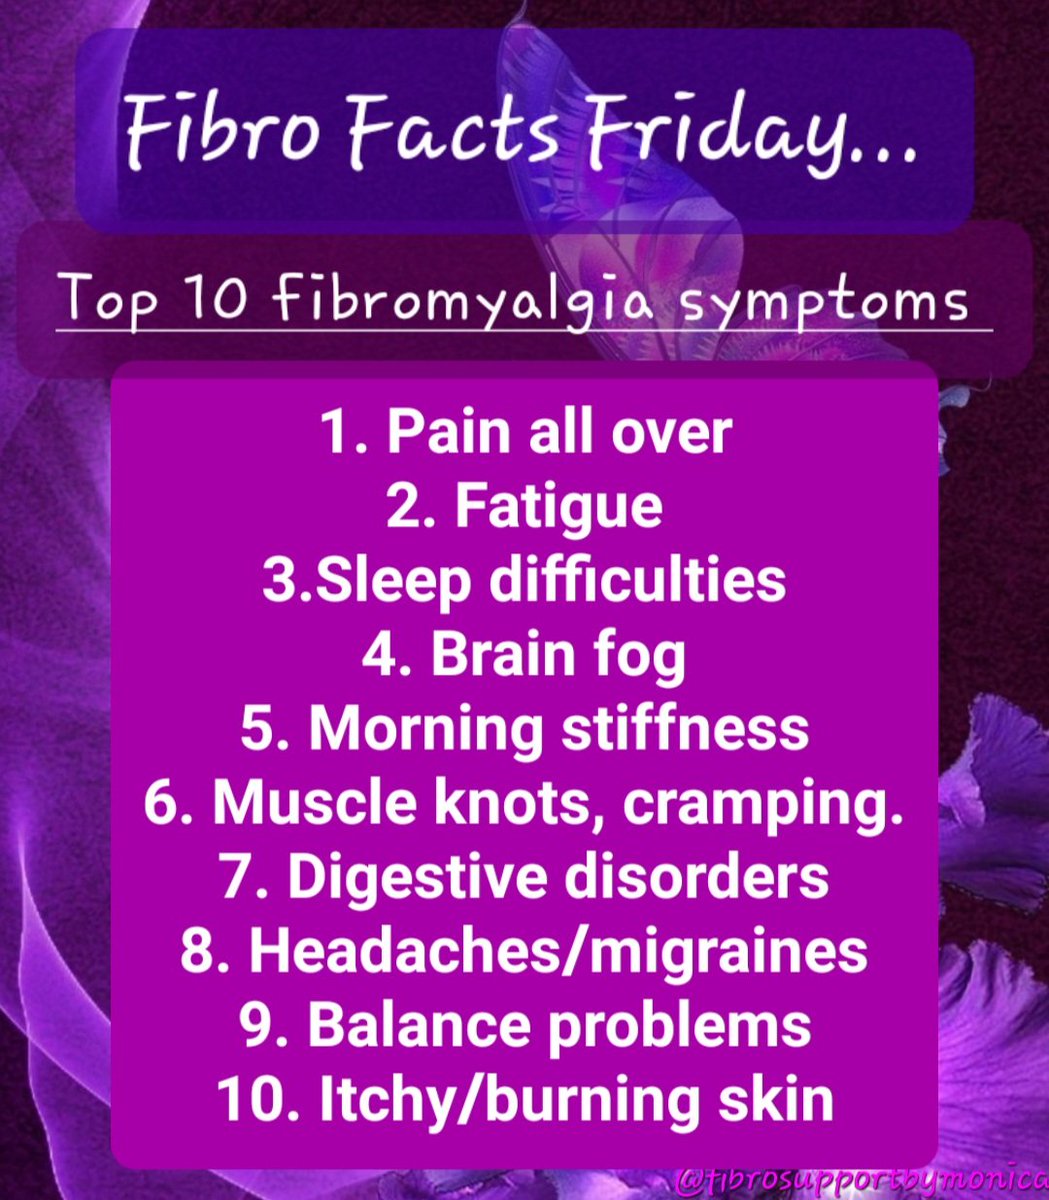 Fibro Facts Friday...
#fibrofactsfriday #fibrofacts #fibromyalgia #CFSME #fibrosupportbymonica